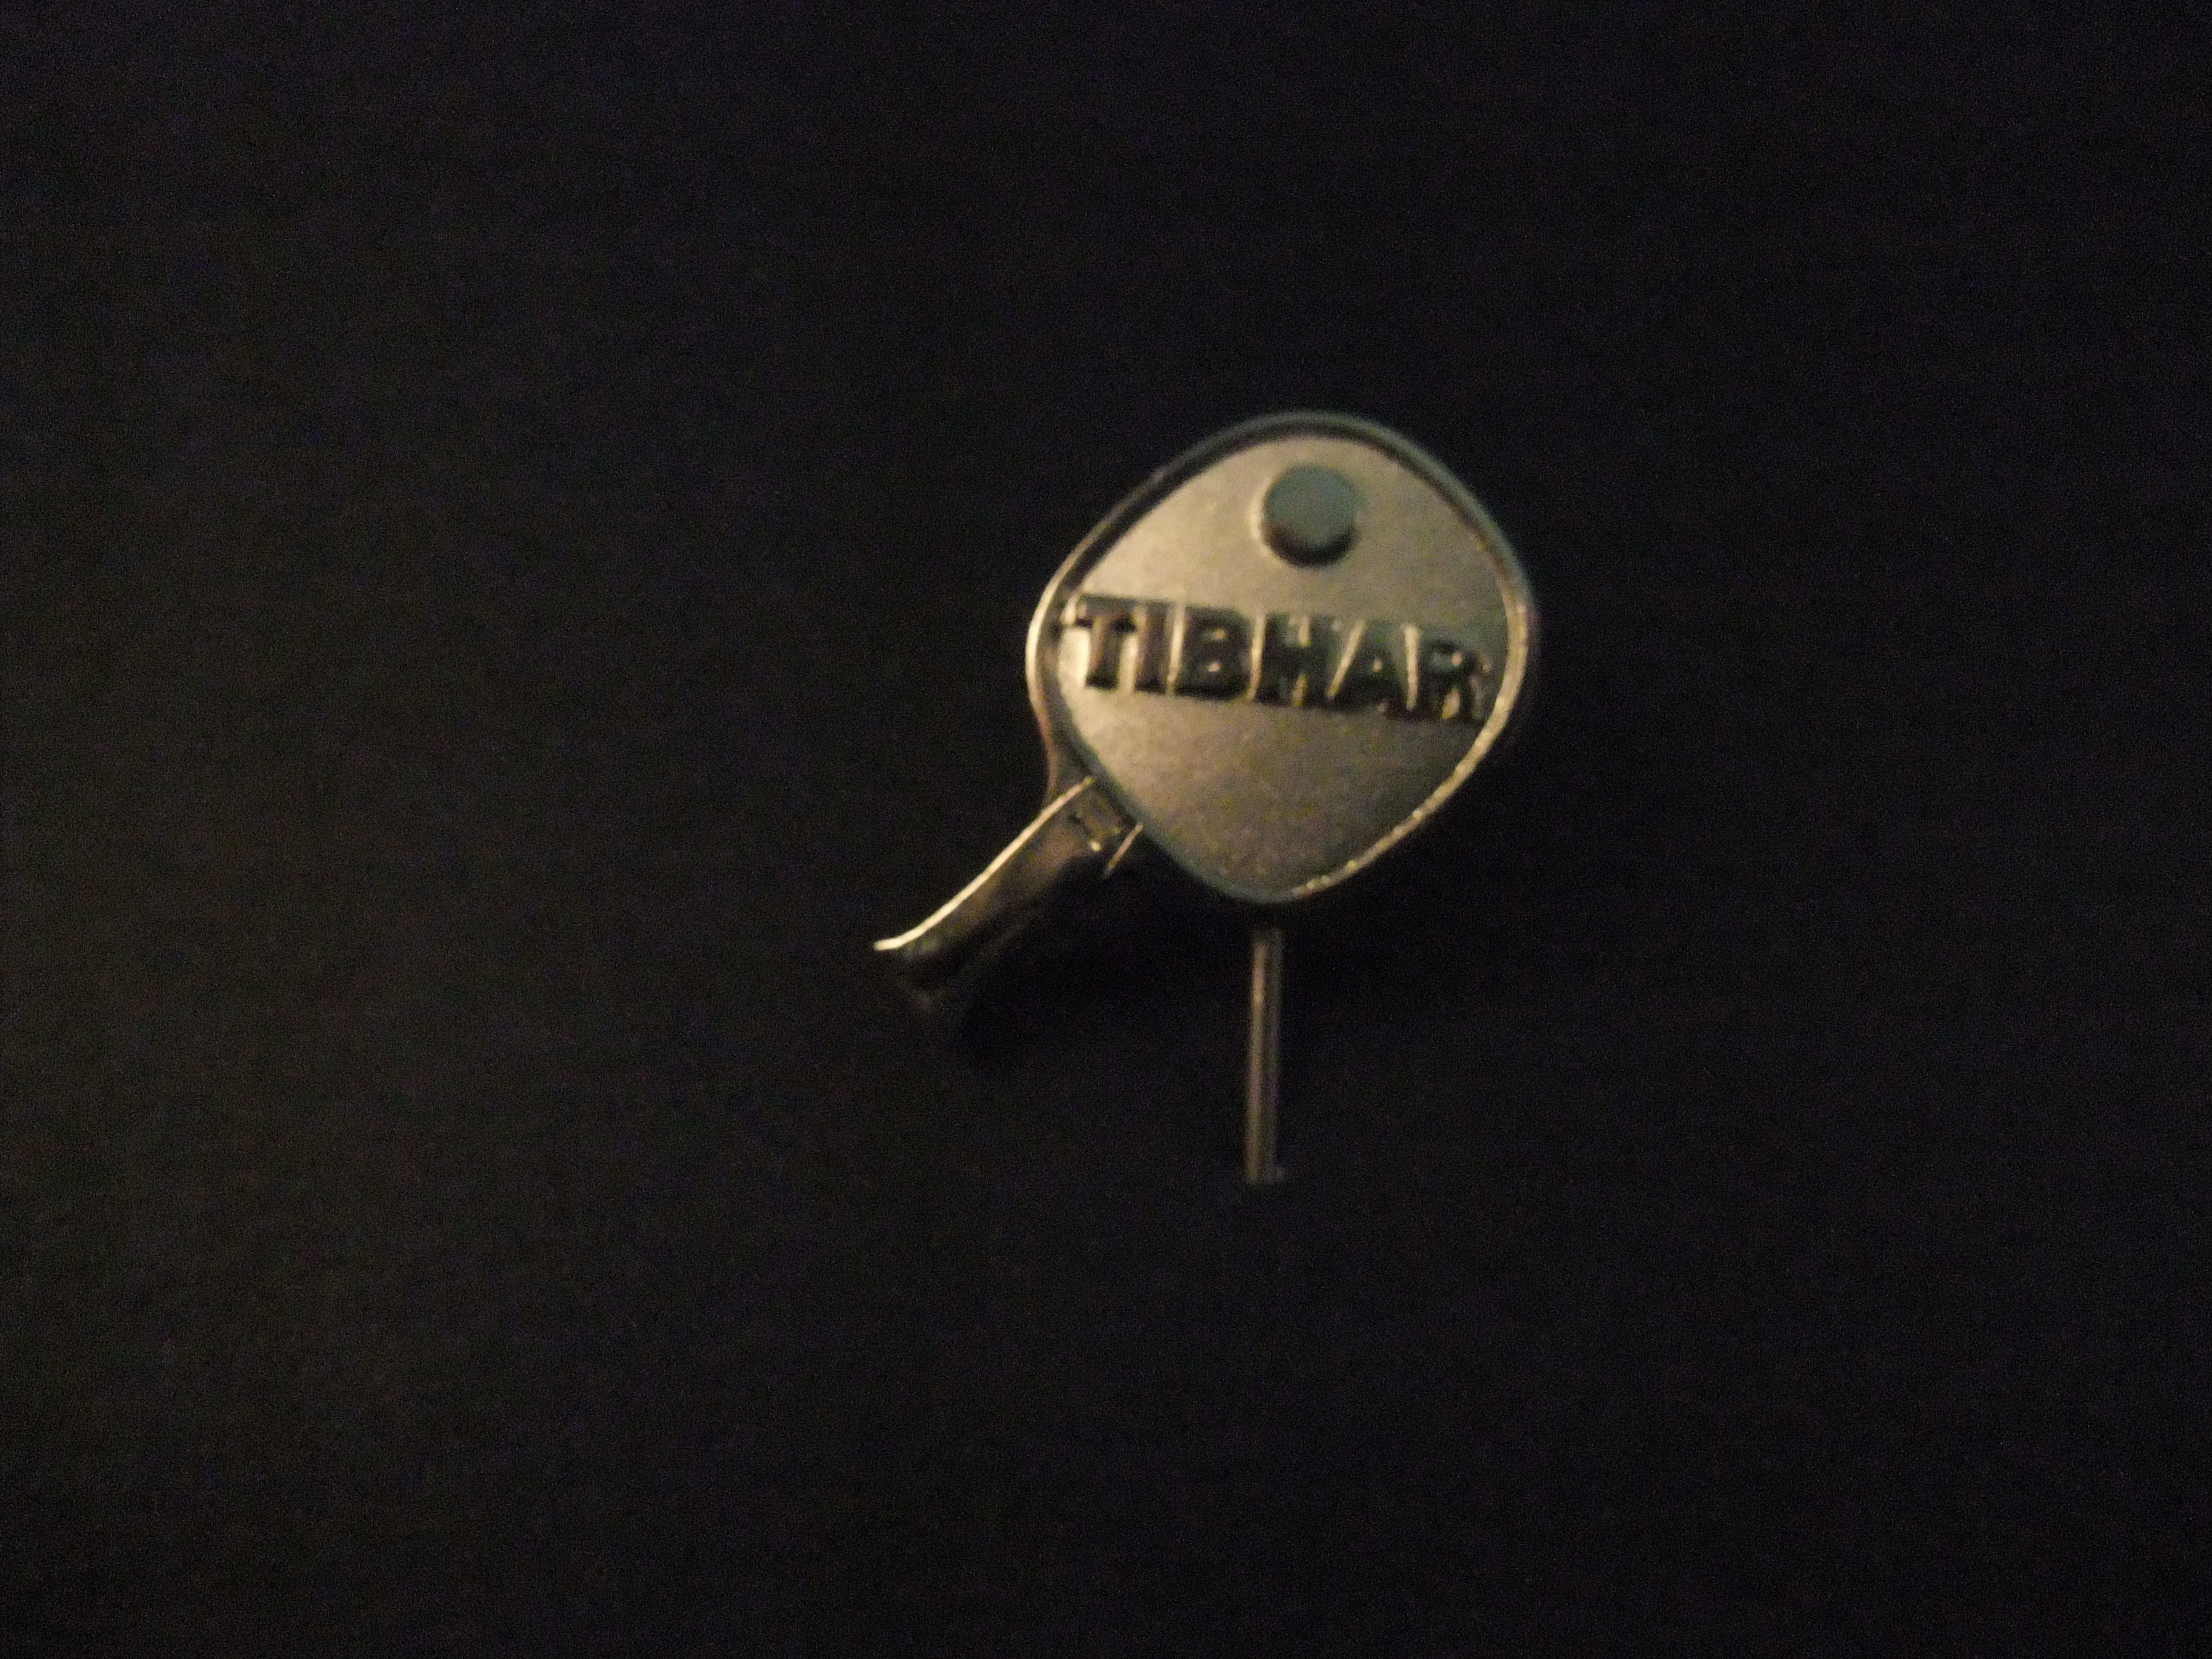 Tibhar Duitse fabrikant van sportartikelen ( tafeltennis) zilverkleurig